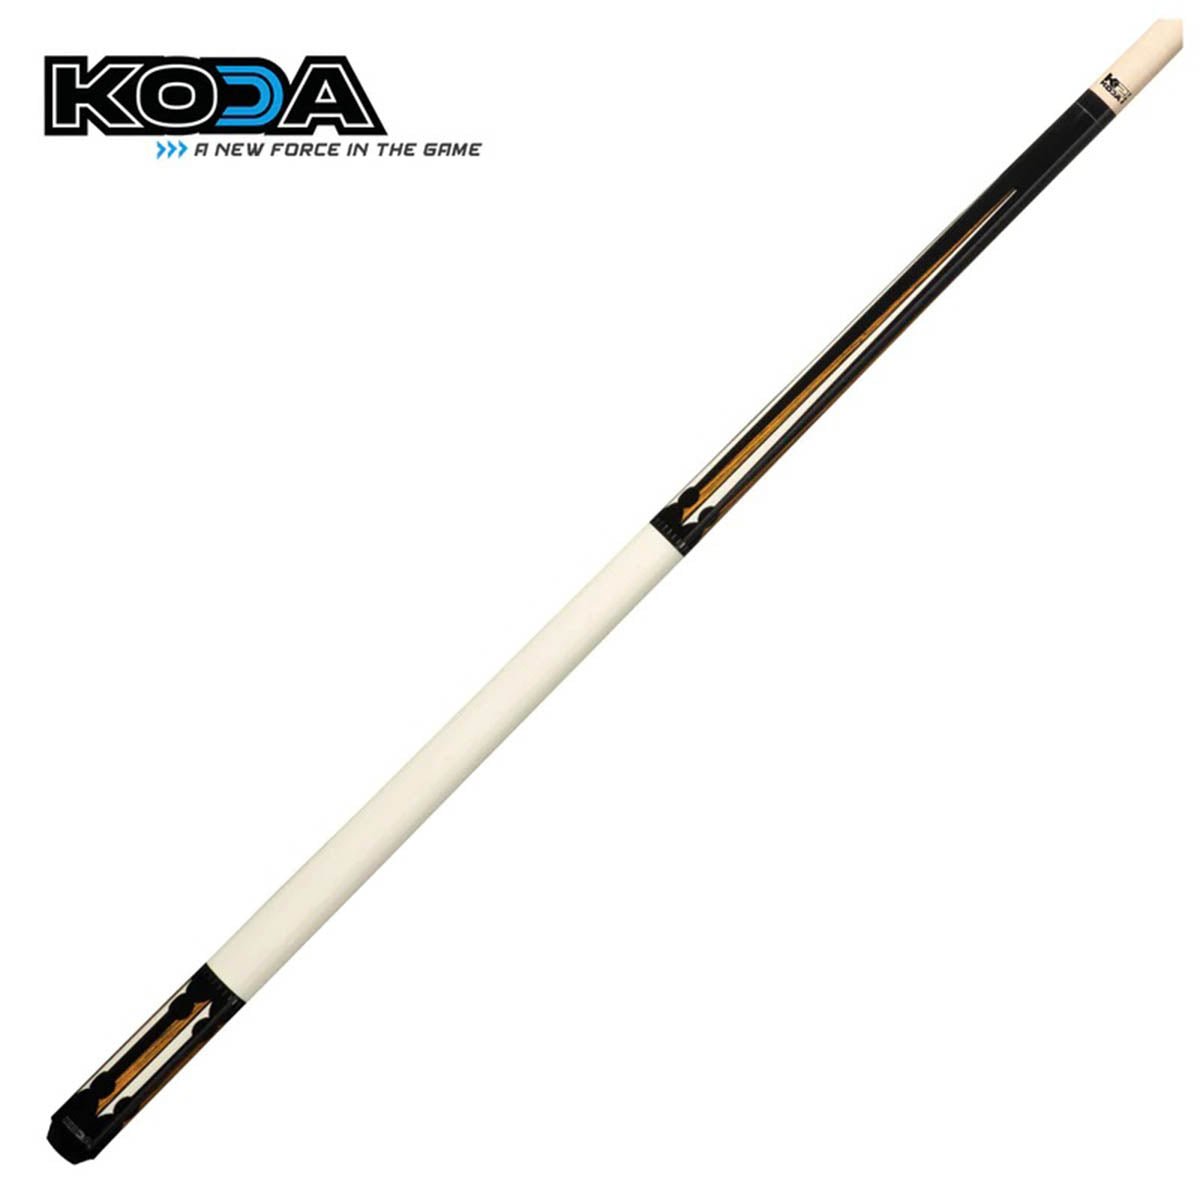 Koda K2 KL130 - BilliardCuesOnline | Singapore pool, snooker and billiard retail and wholesaler